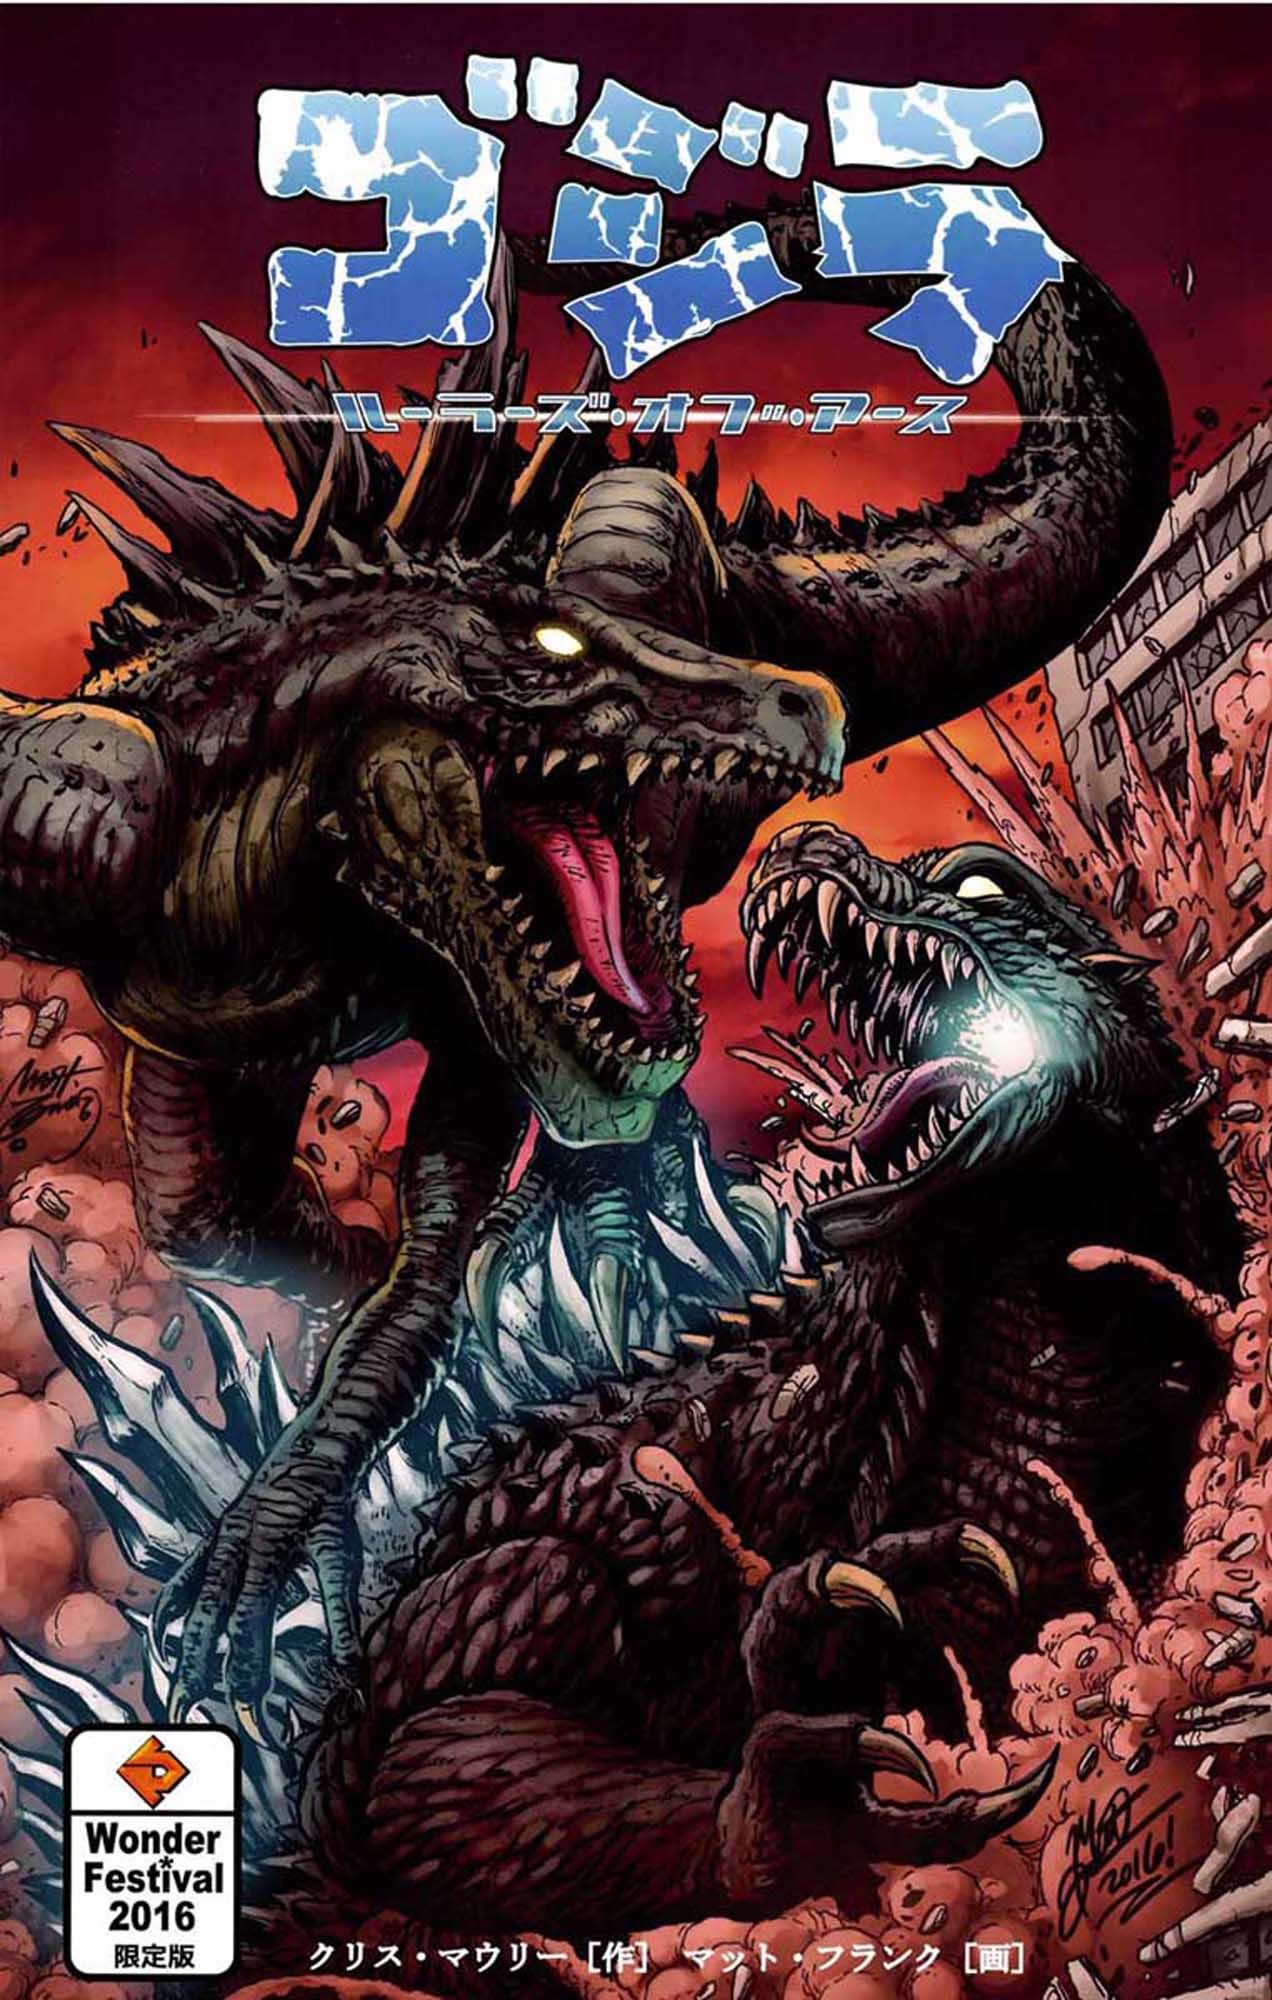 Godzilla: Rulers of Earth 2 cover, in E C's Covers: <font color=#0080FF><b> GODZILLA</b></font> Comic Art Gallery Room